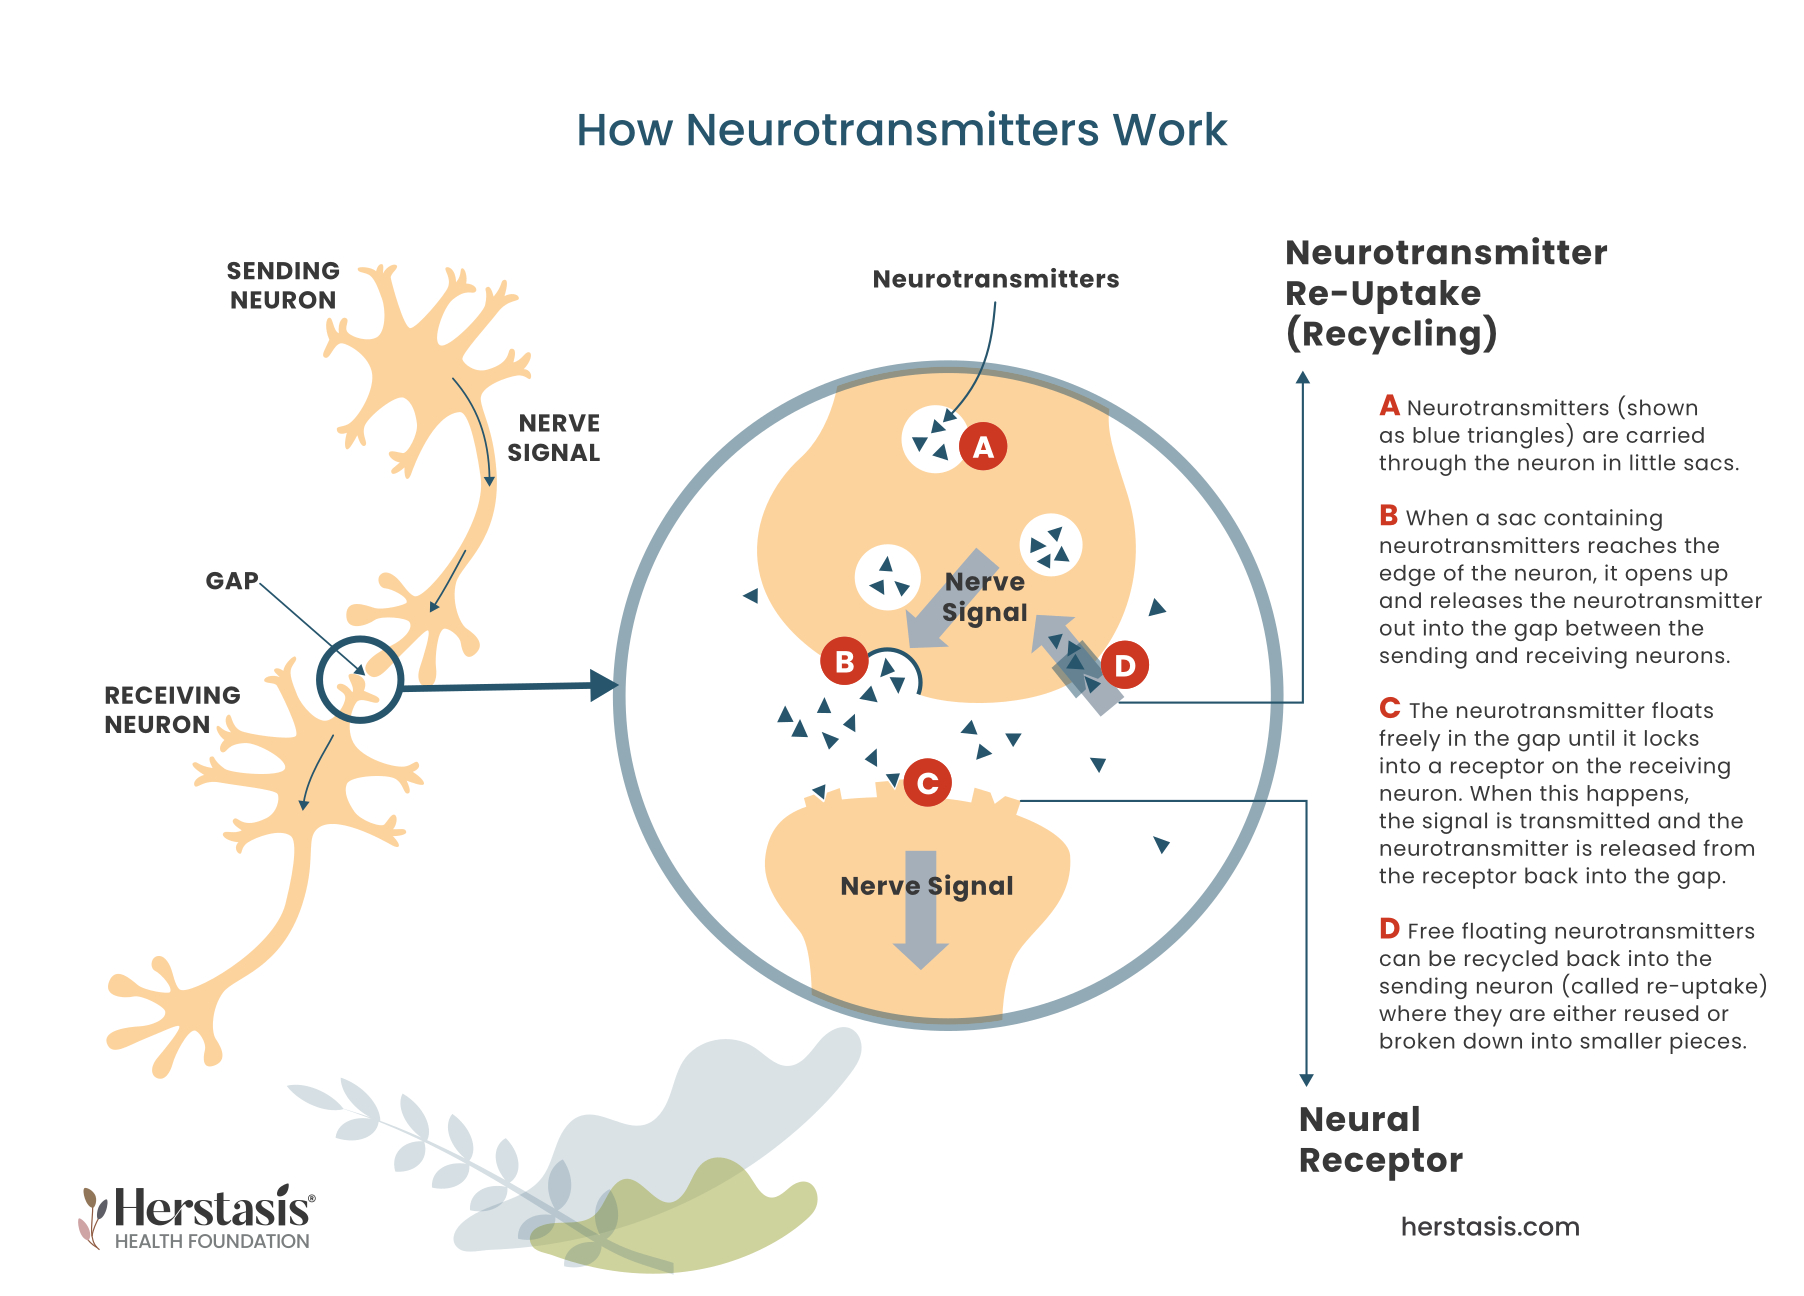 Diagram of how neurotransmitters work. Sending neuron, gap and receiving neuron. Neurotranmitters are carried through the neuron in little sacs.